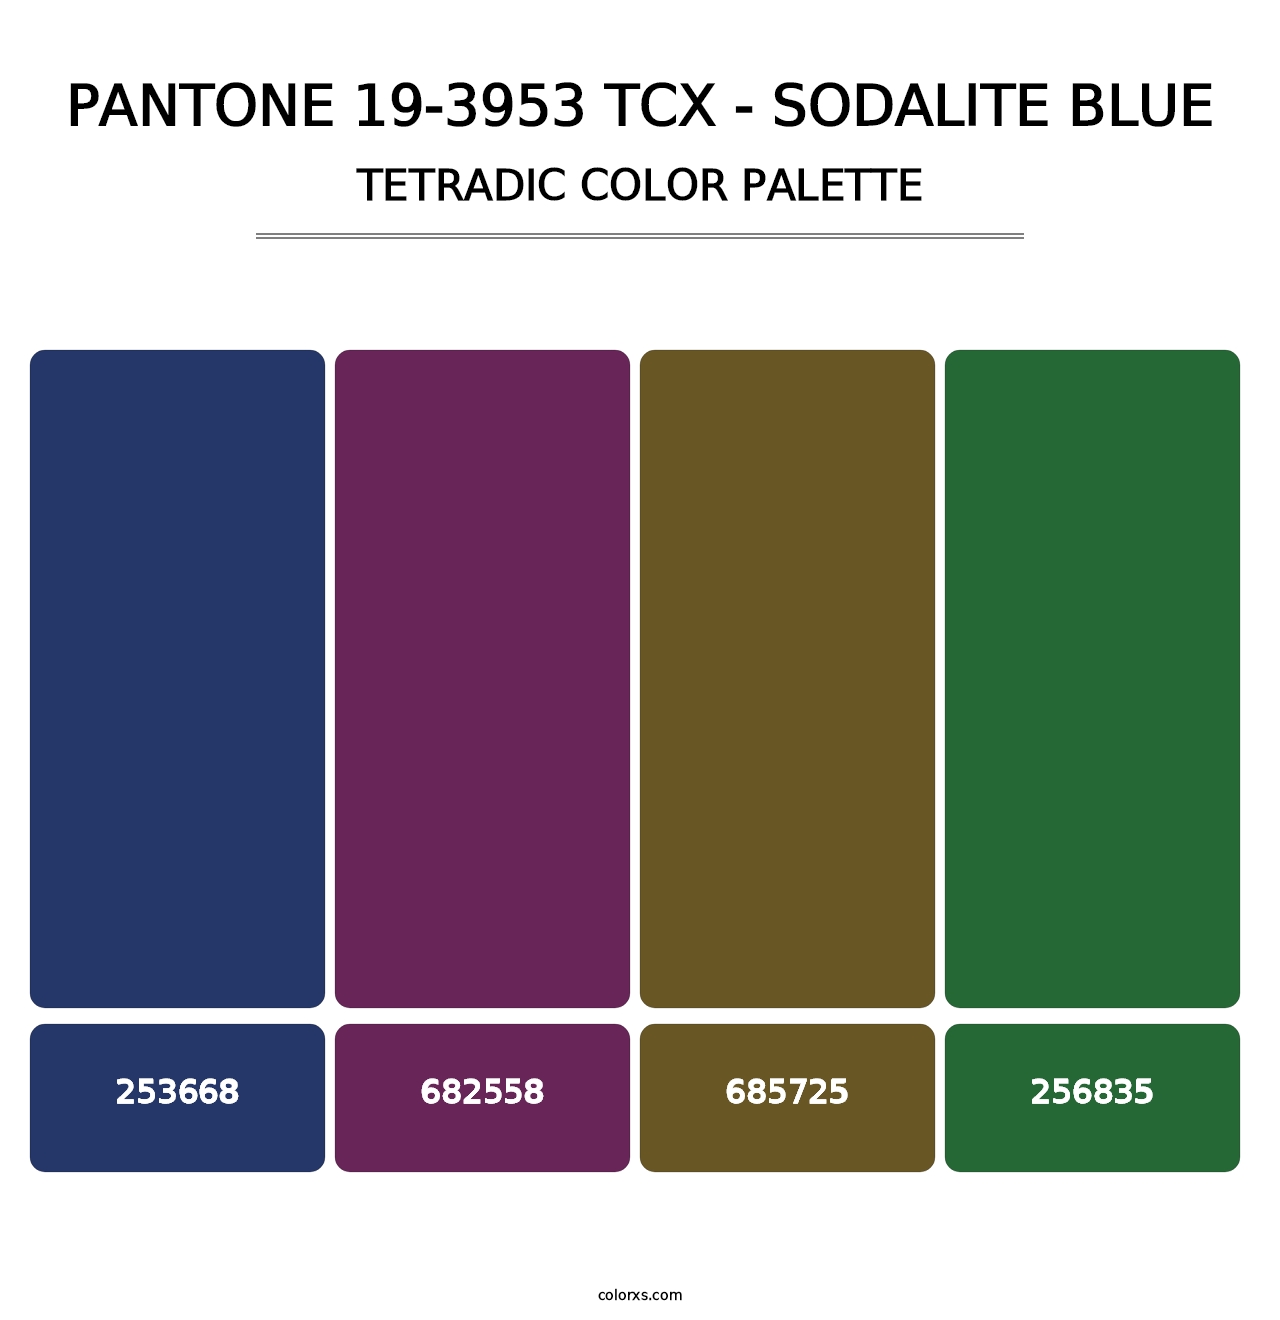 PANTONE 19-3953 TCX - Sodalite Blue - Tetradic Color Palette